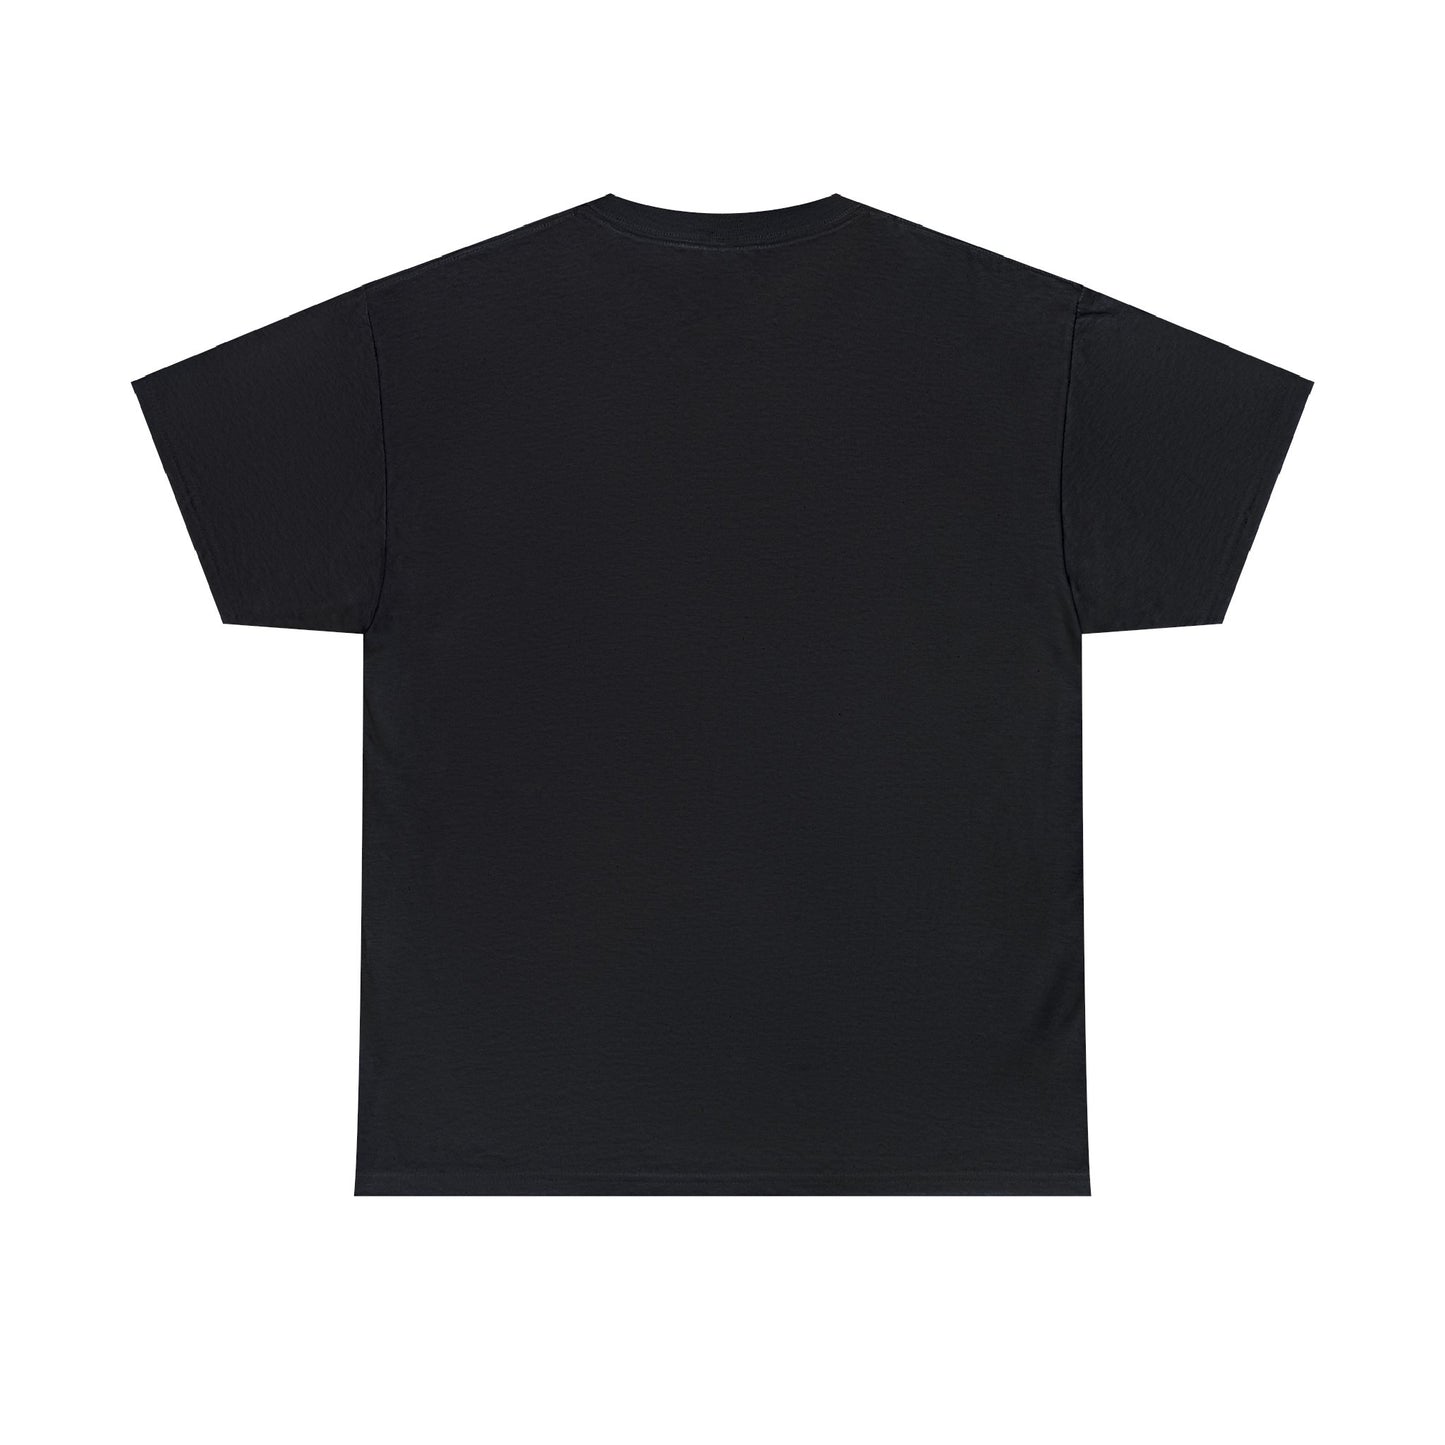 Buy The Dip Unisex Heavy Cotton T-Shirt